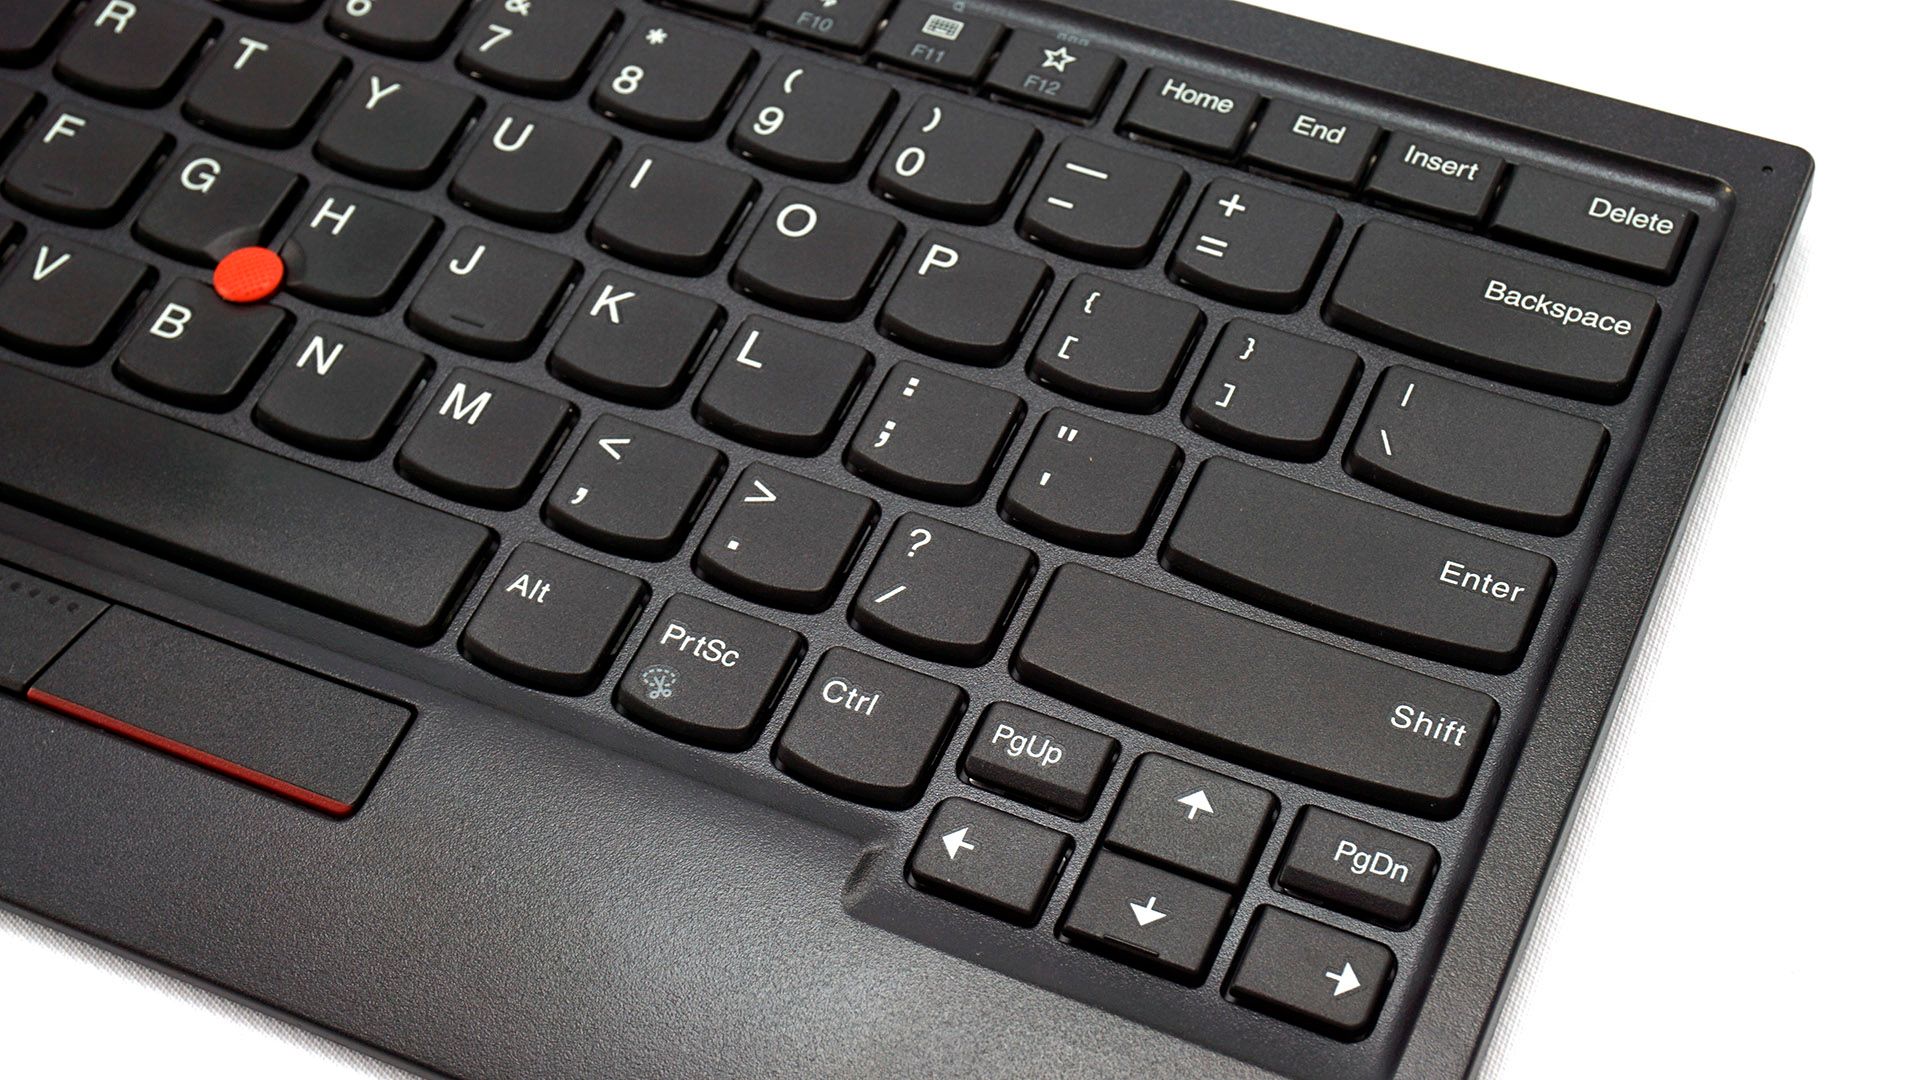 ThinkPad keyboard right side cluster